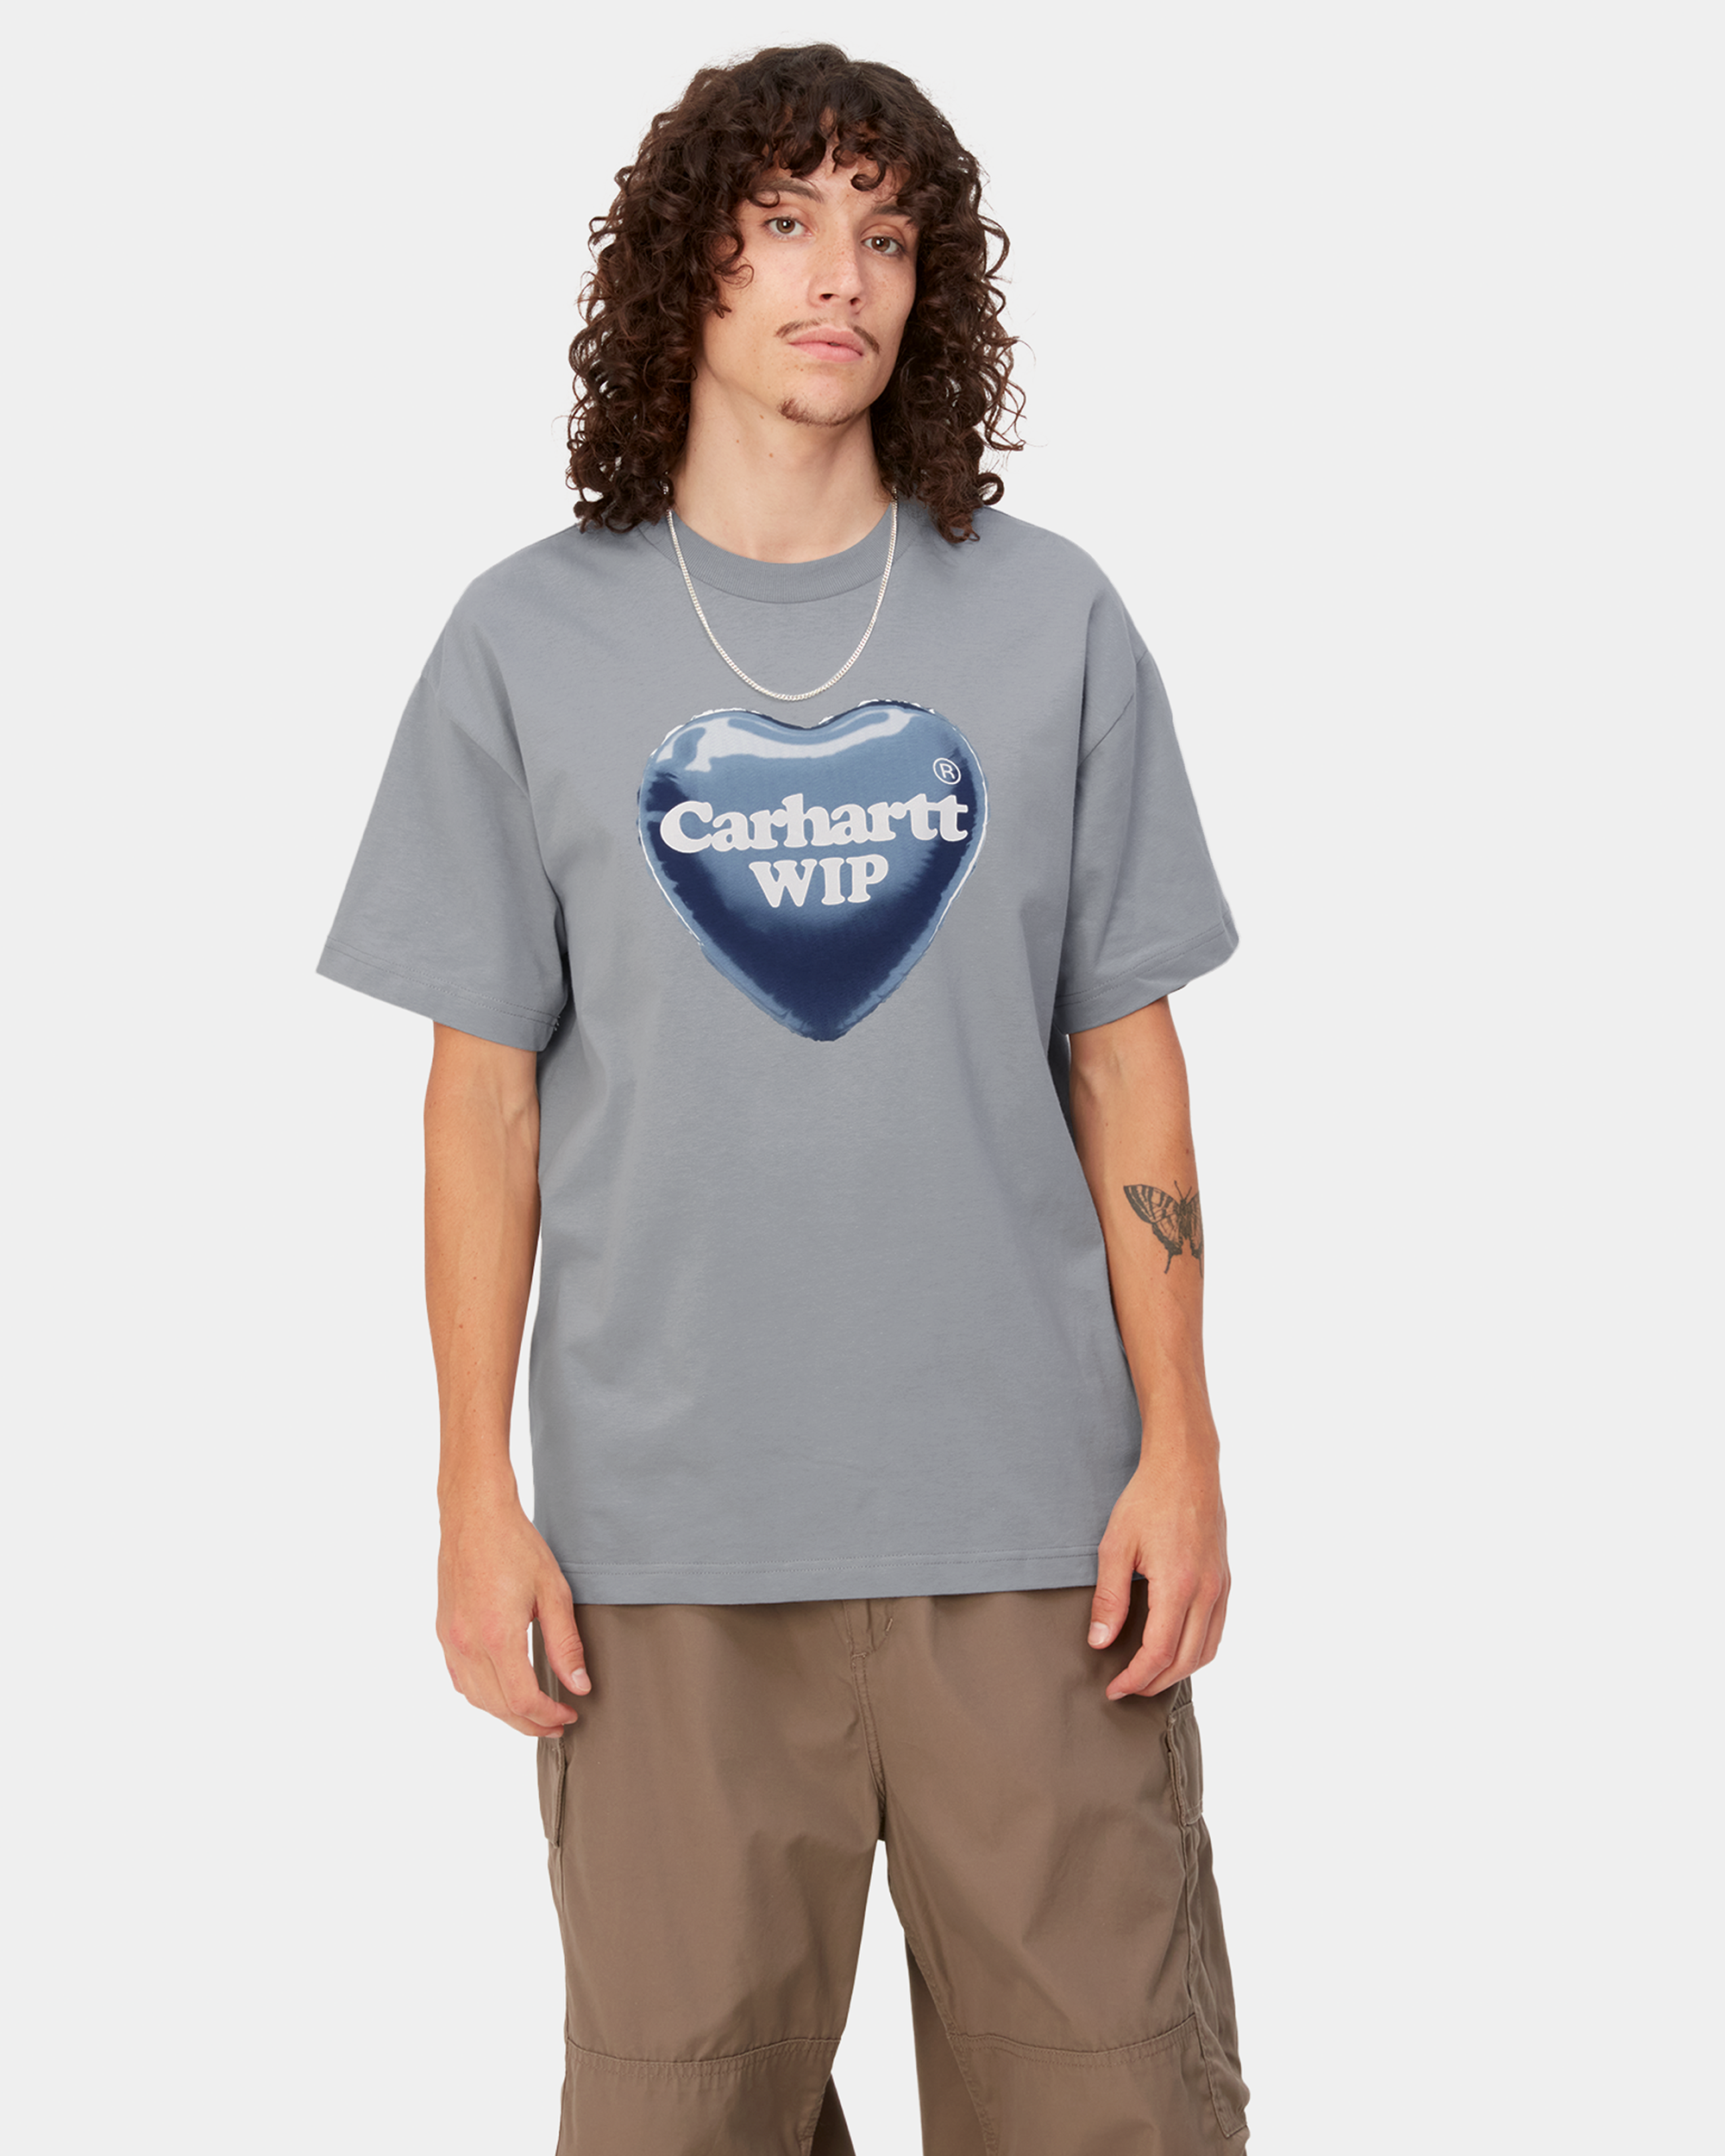 S/S Heart Balloon T-Shirt - Mirror